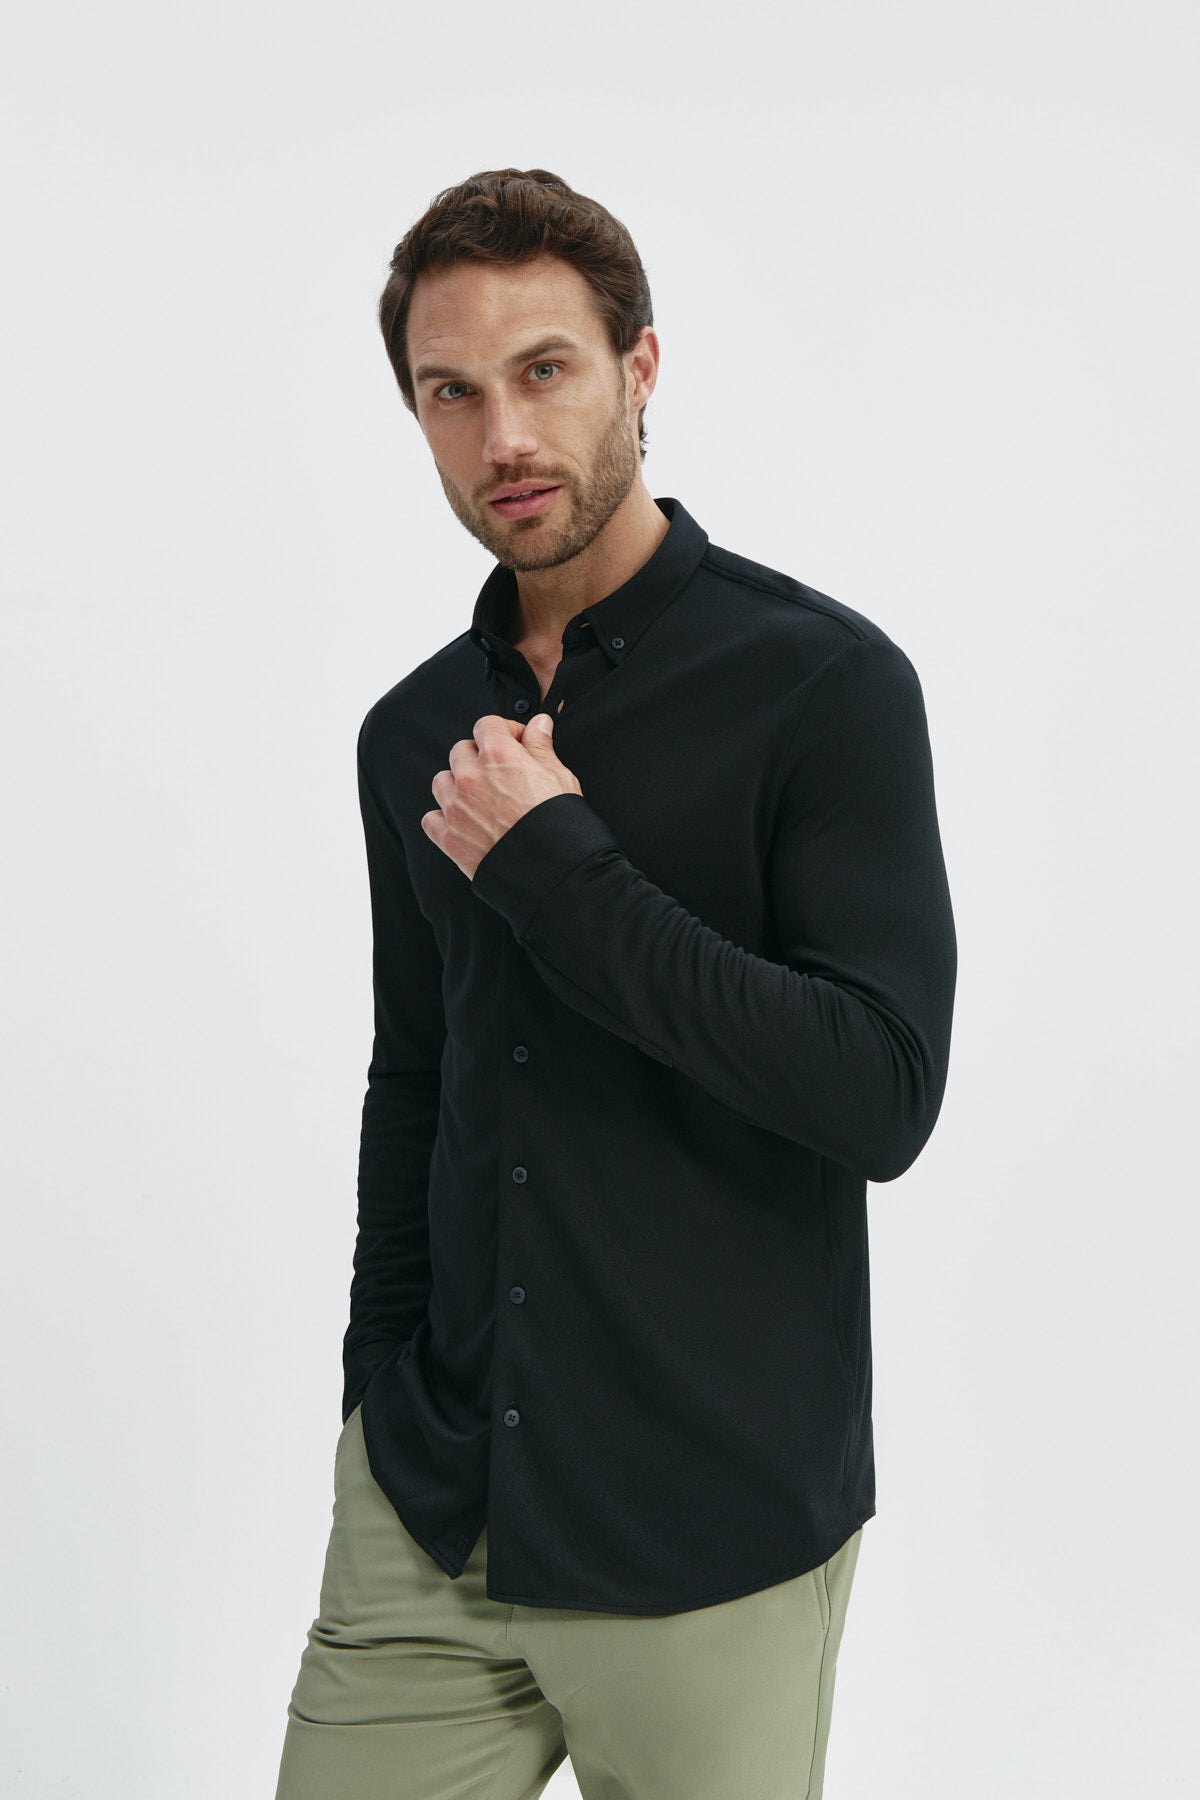 Camisa casual negra para hombre sin arrugas ni manchas. Manga larga, antiarrugas y antimanchas. Foto frente